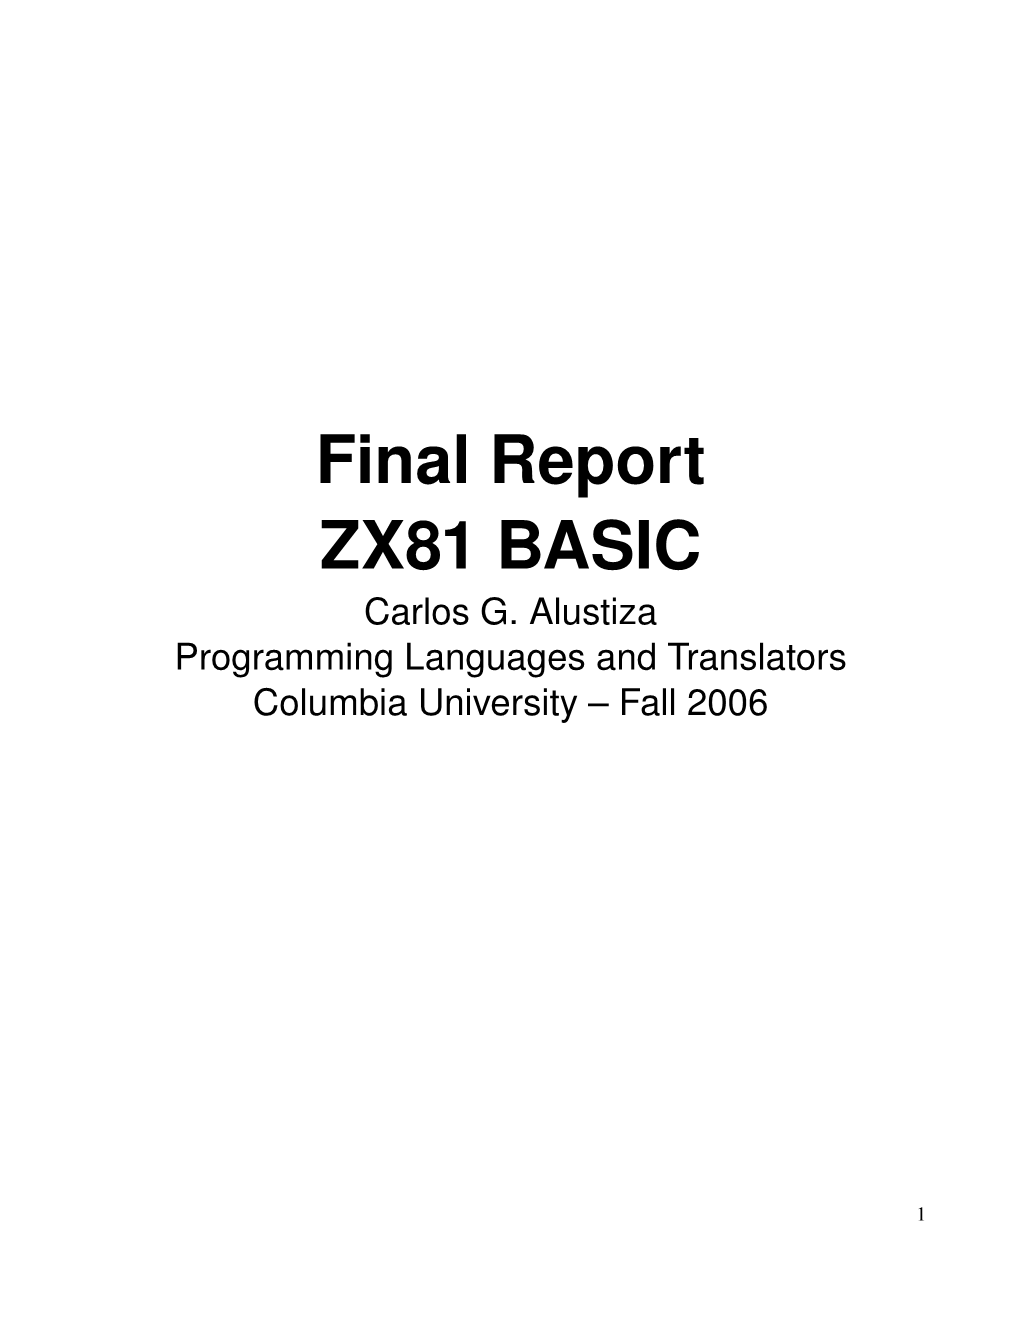 Final Report ZX81 BASIC Carlos G